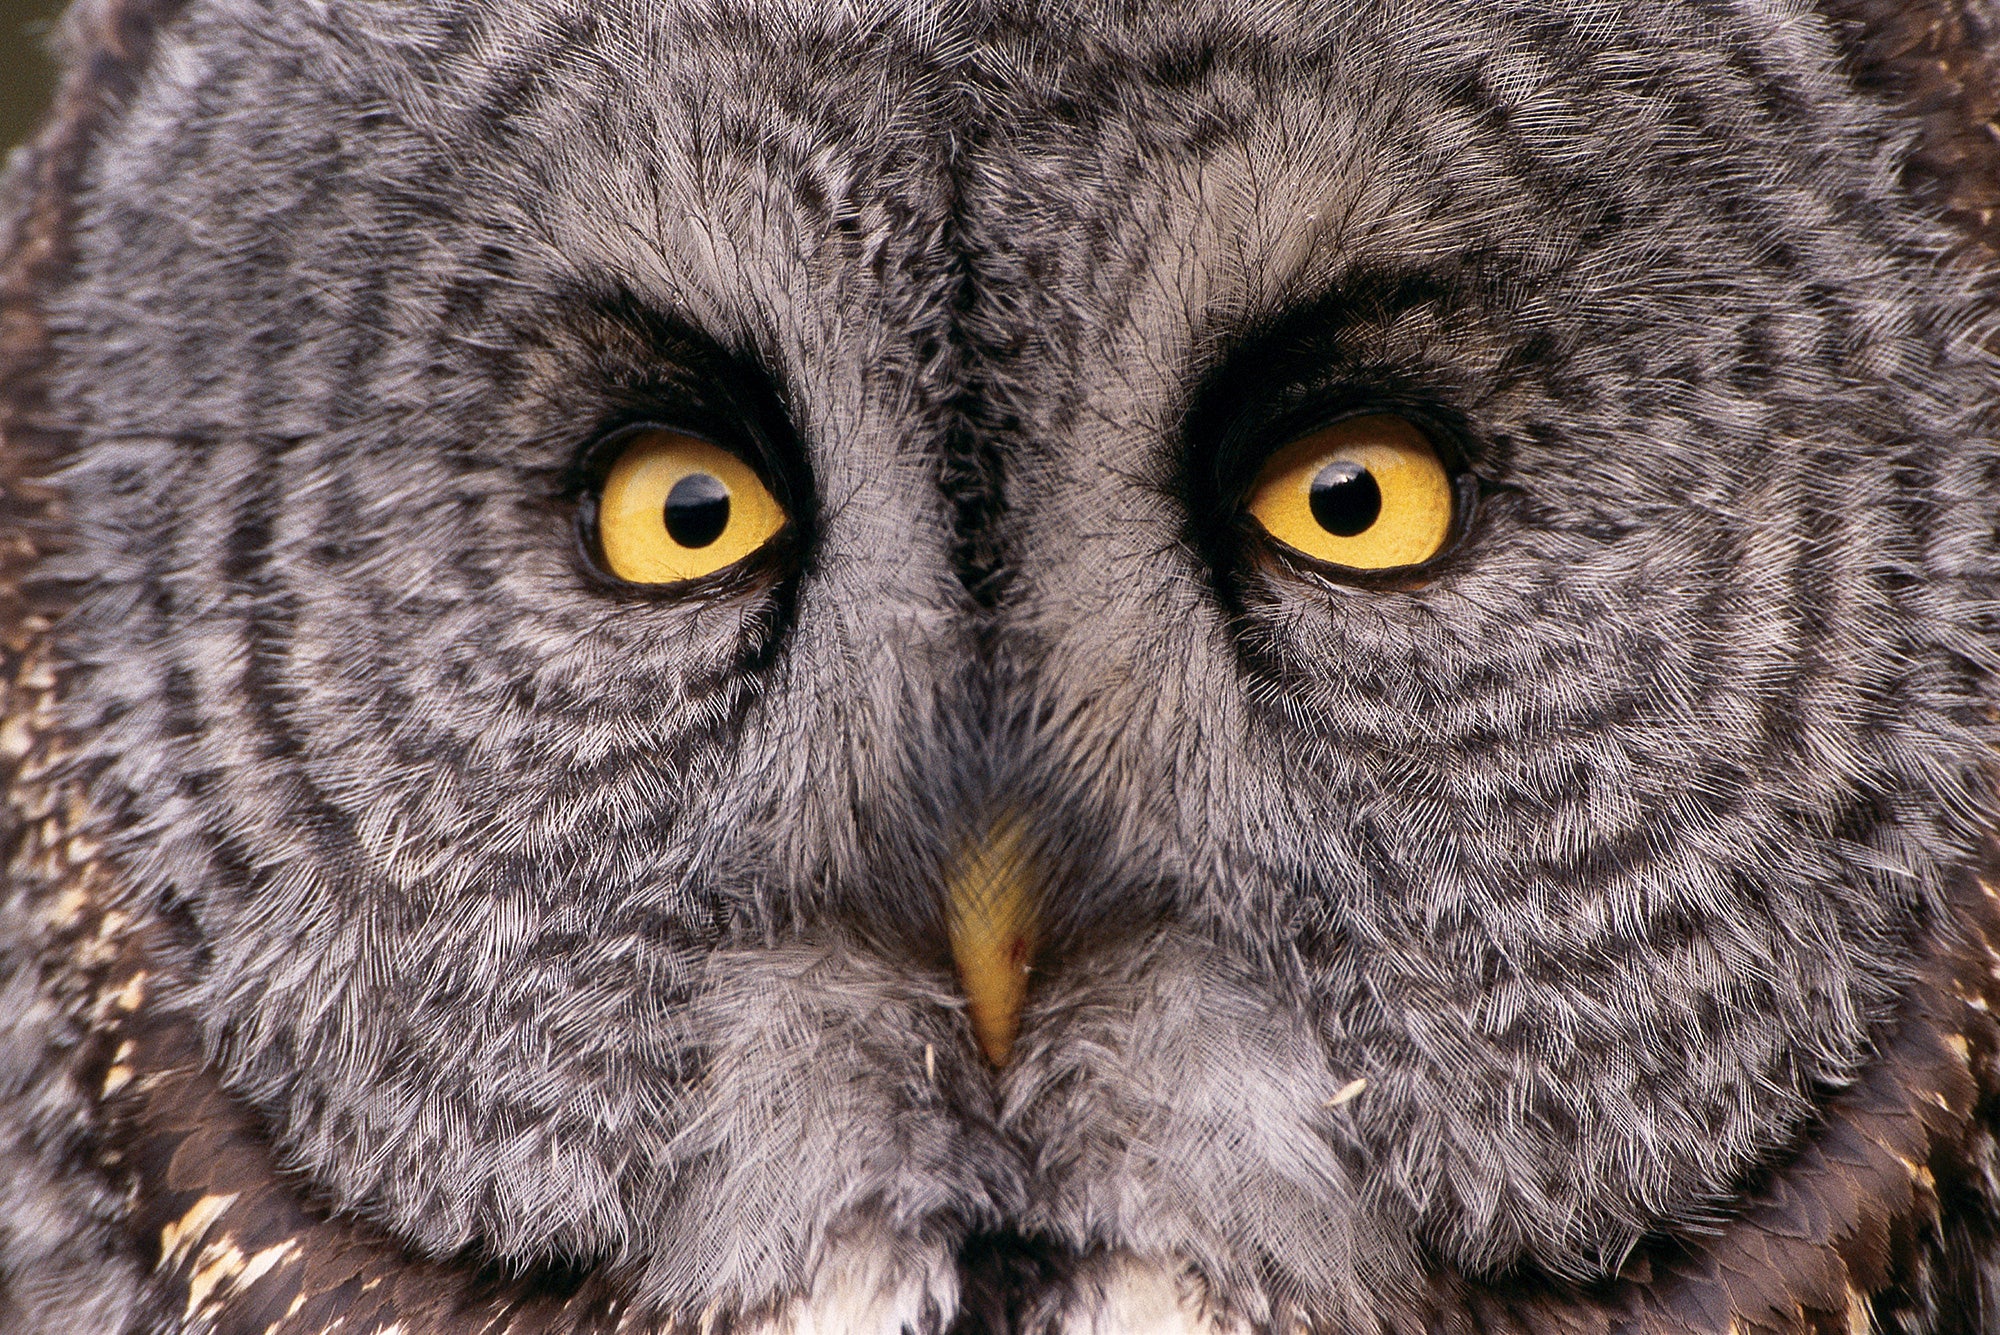 A close up photo of a grey owl's face. End of image description.